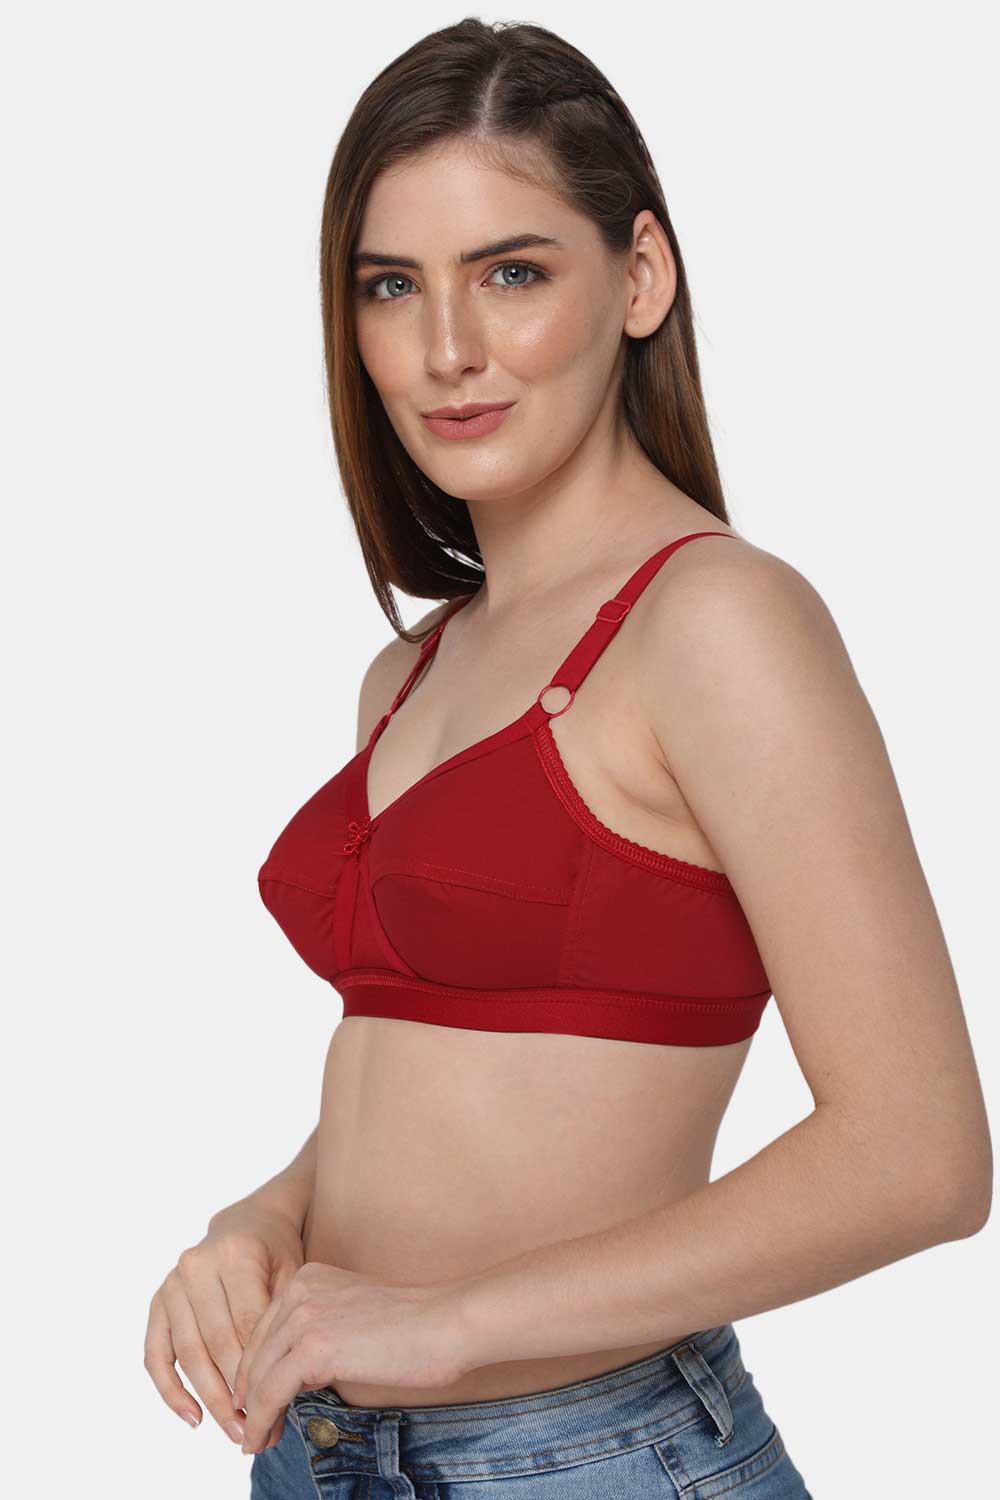 100% Cotton Net Bra For Women (Red)